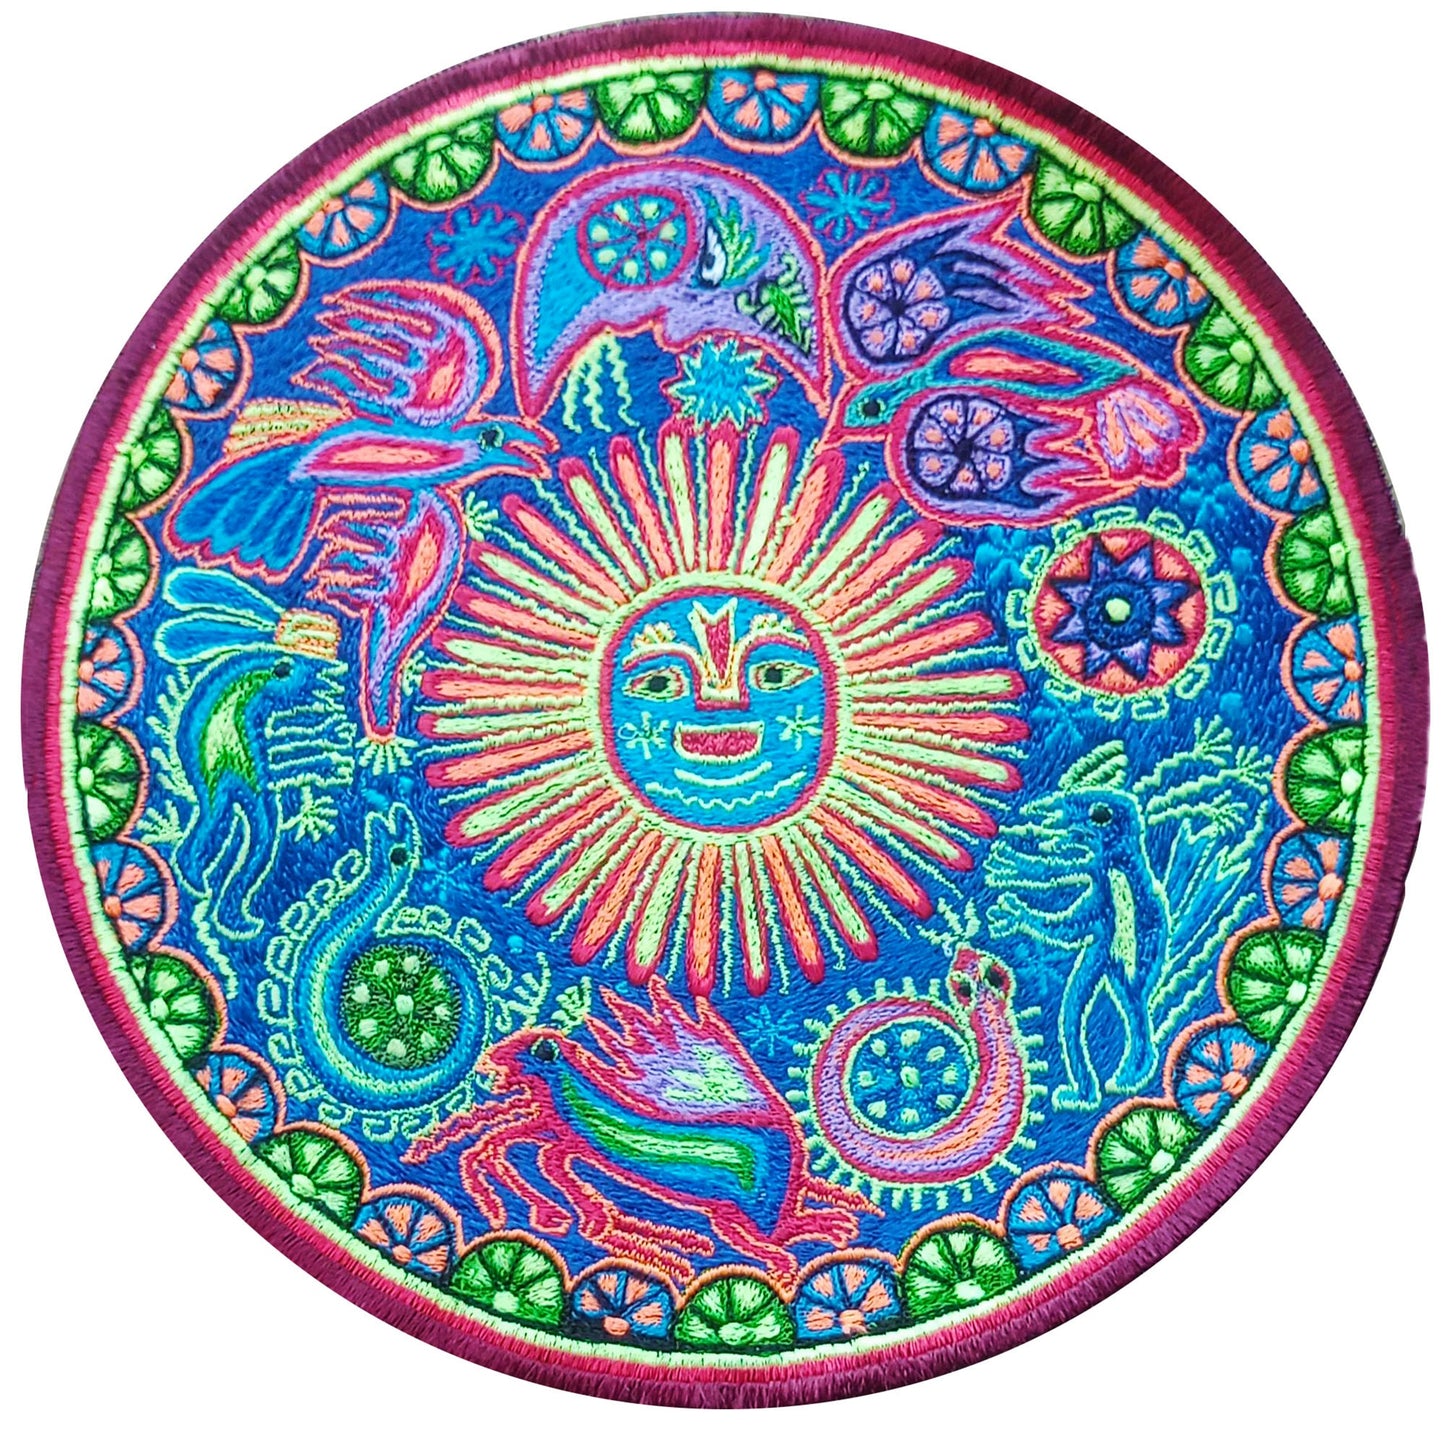 Huichol Peyote Sunshine embroidery art magic cactus artwork mescaline blacklight glowing psychedelic indigene decoration UV active glowing